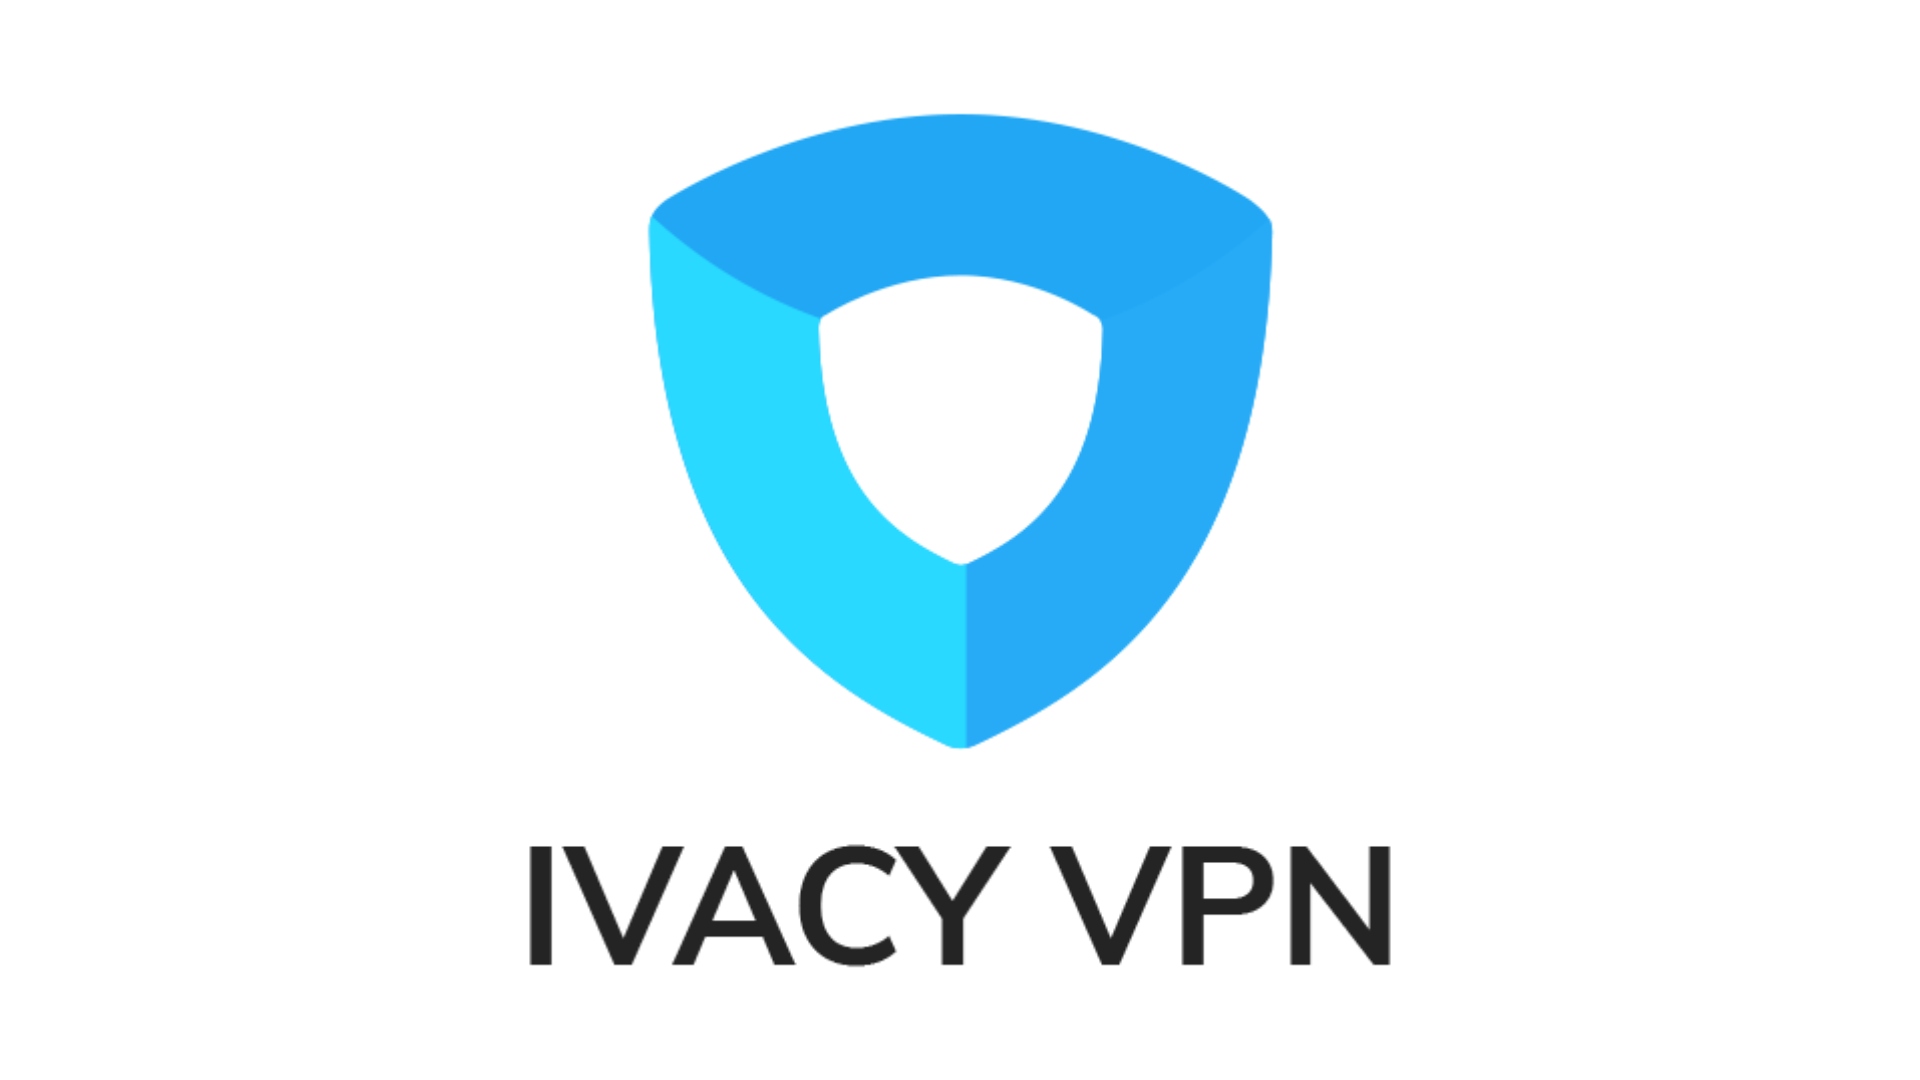 Best YouTube VPN: Ivacy VPN. Image shows the company logo.